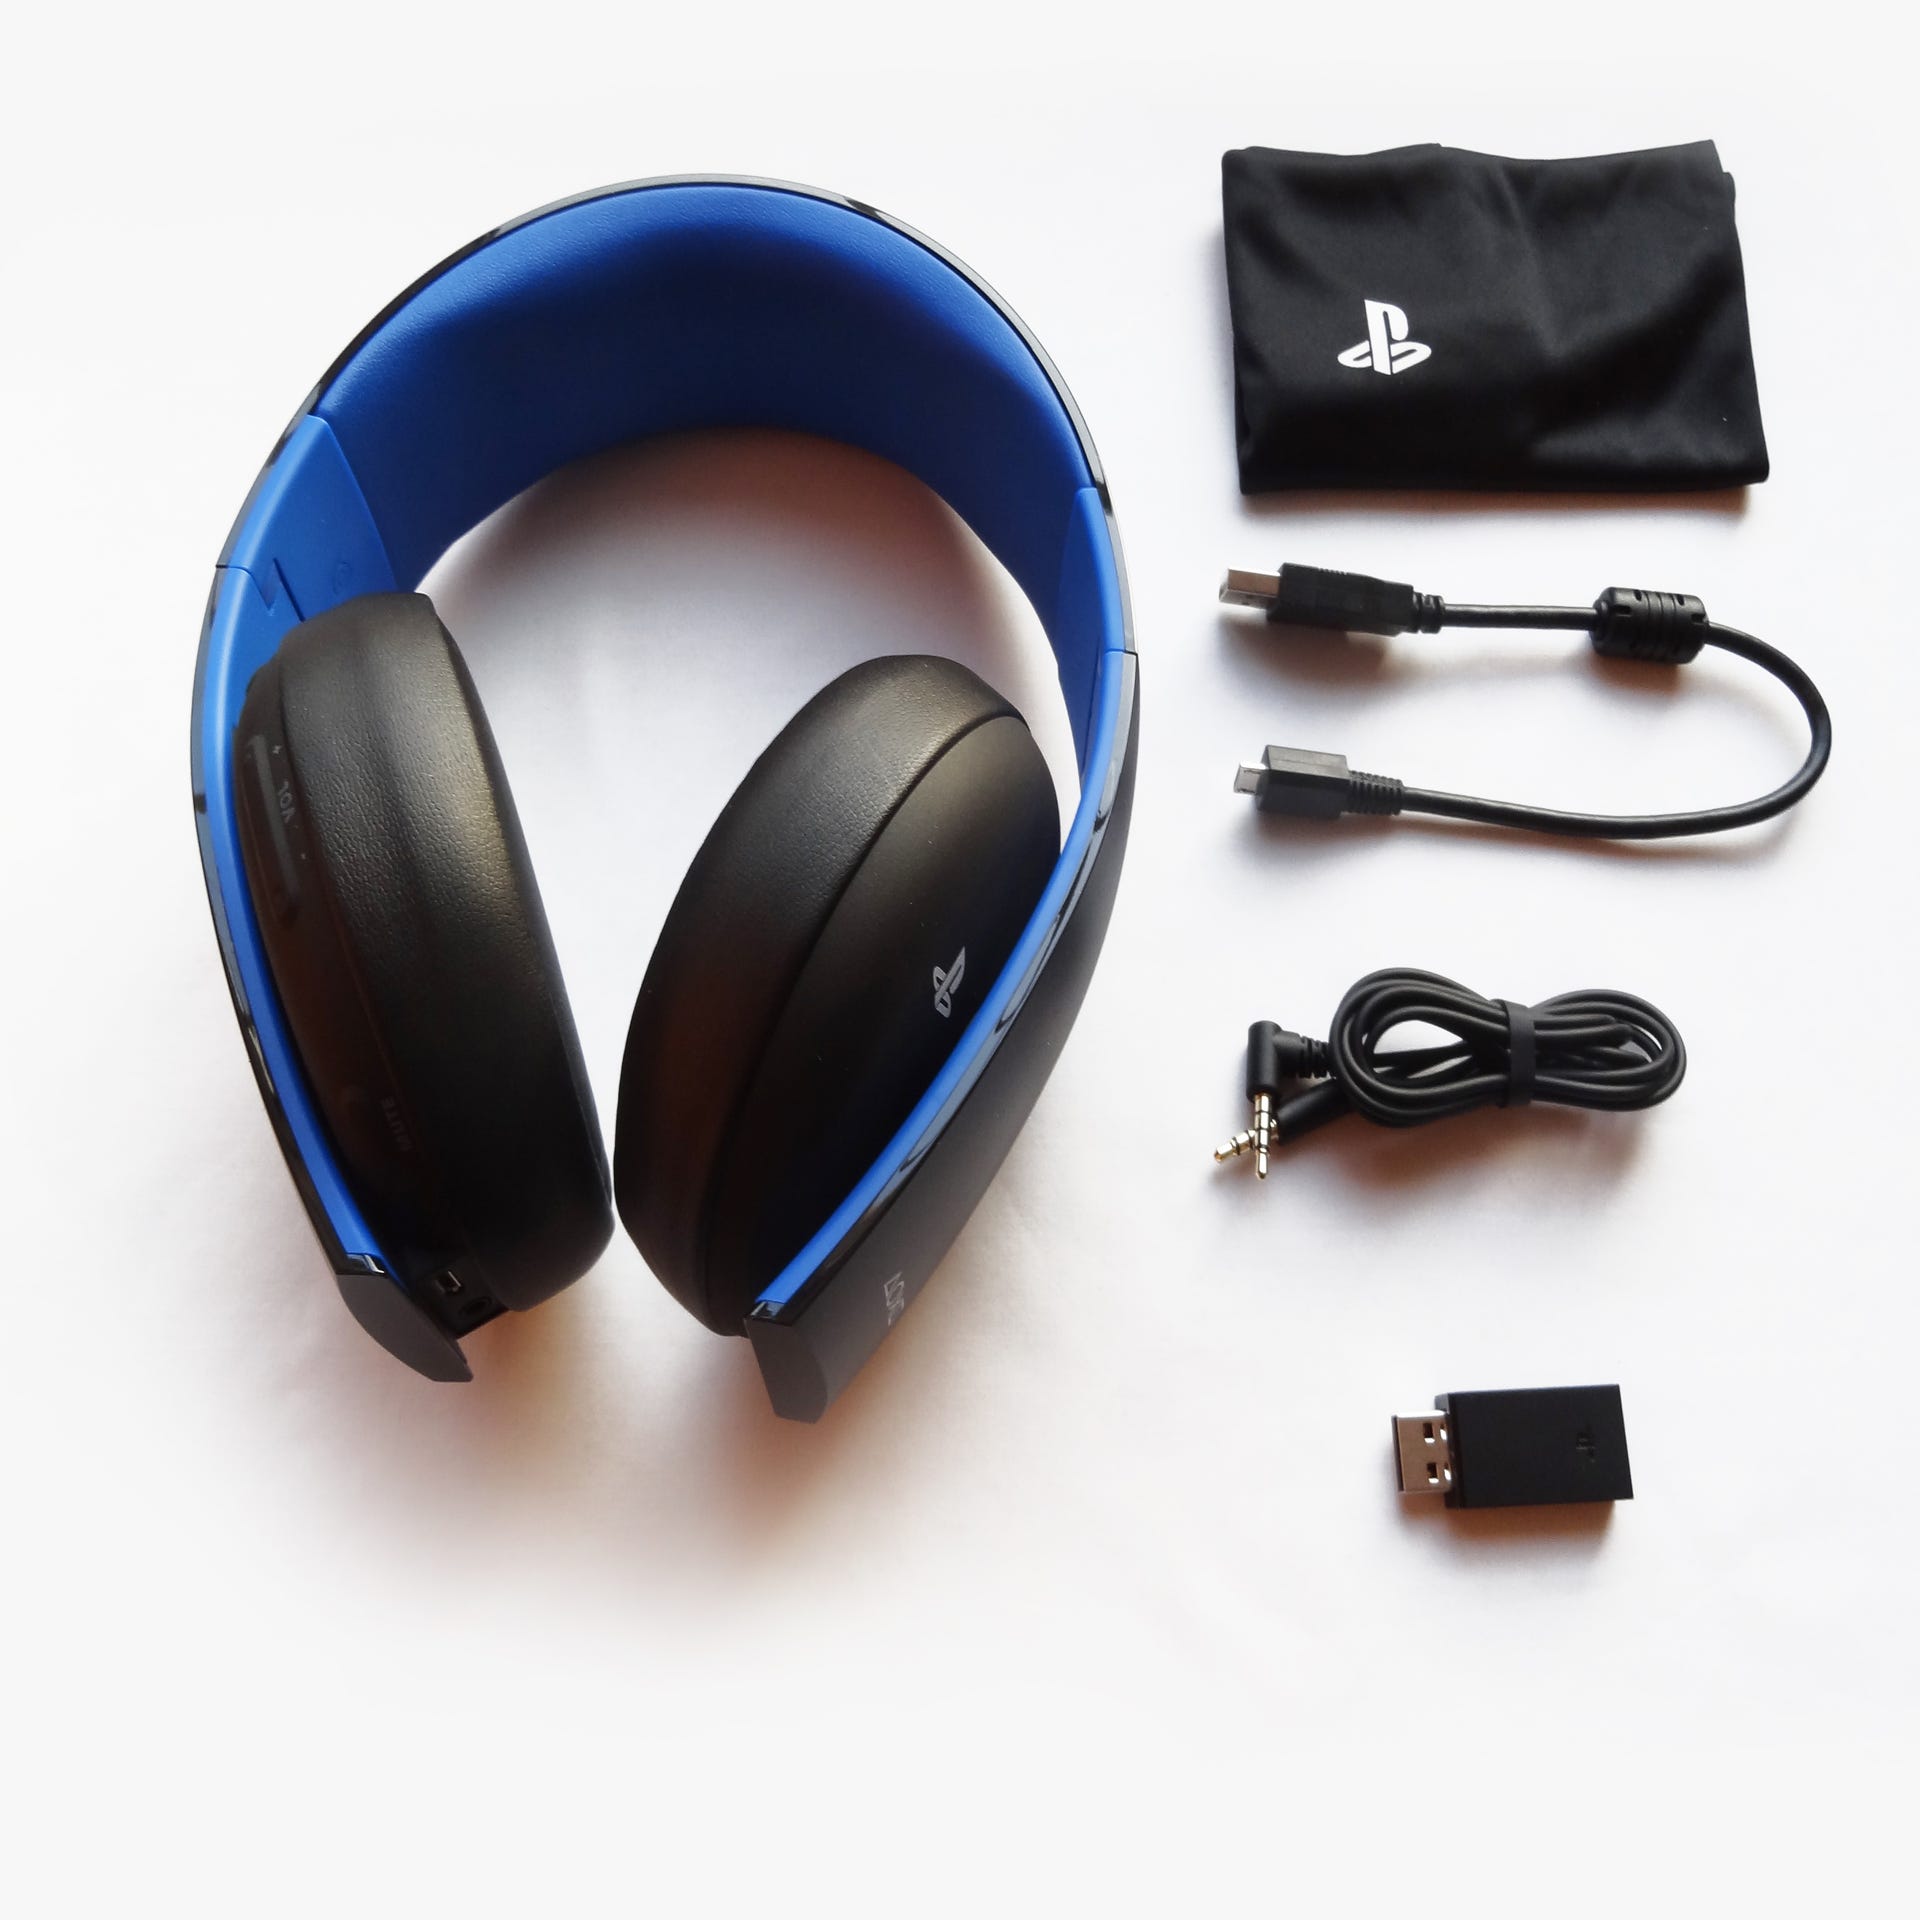 Vrijgekomen Beweging Onderstrepen Sony Wireless Headset 2.0 review | Eurogamer.net